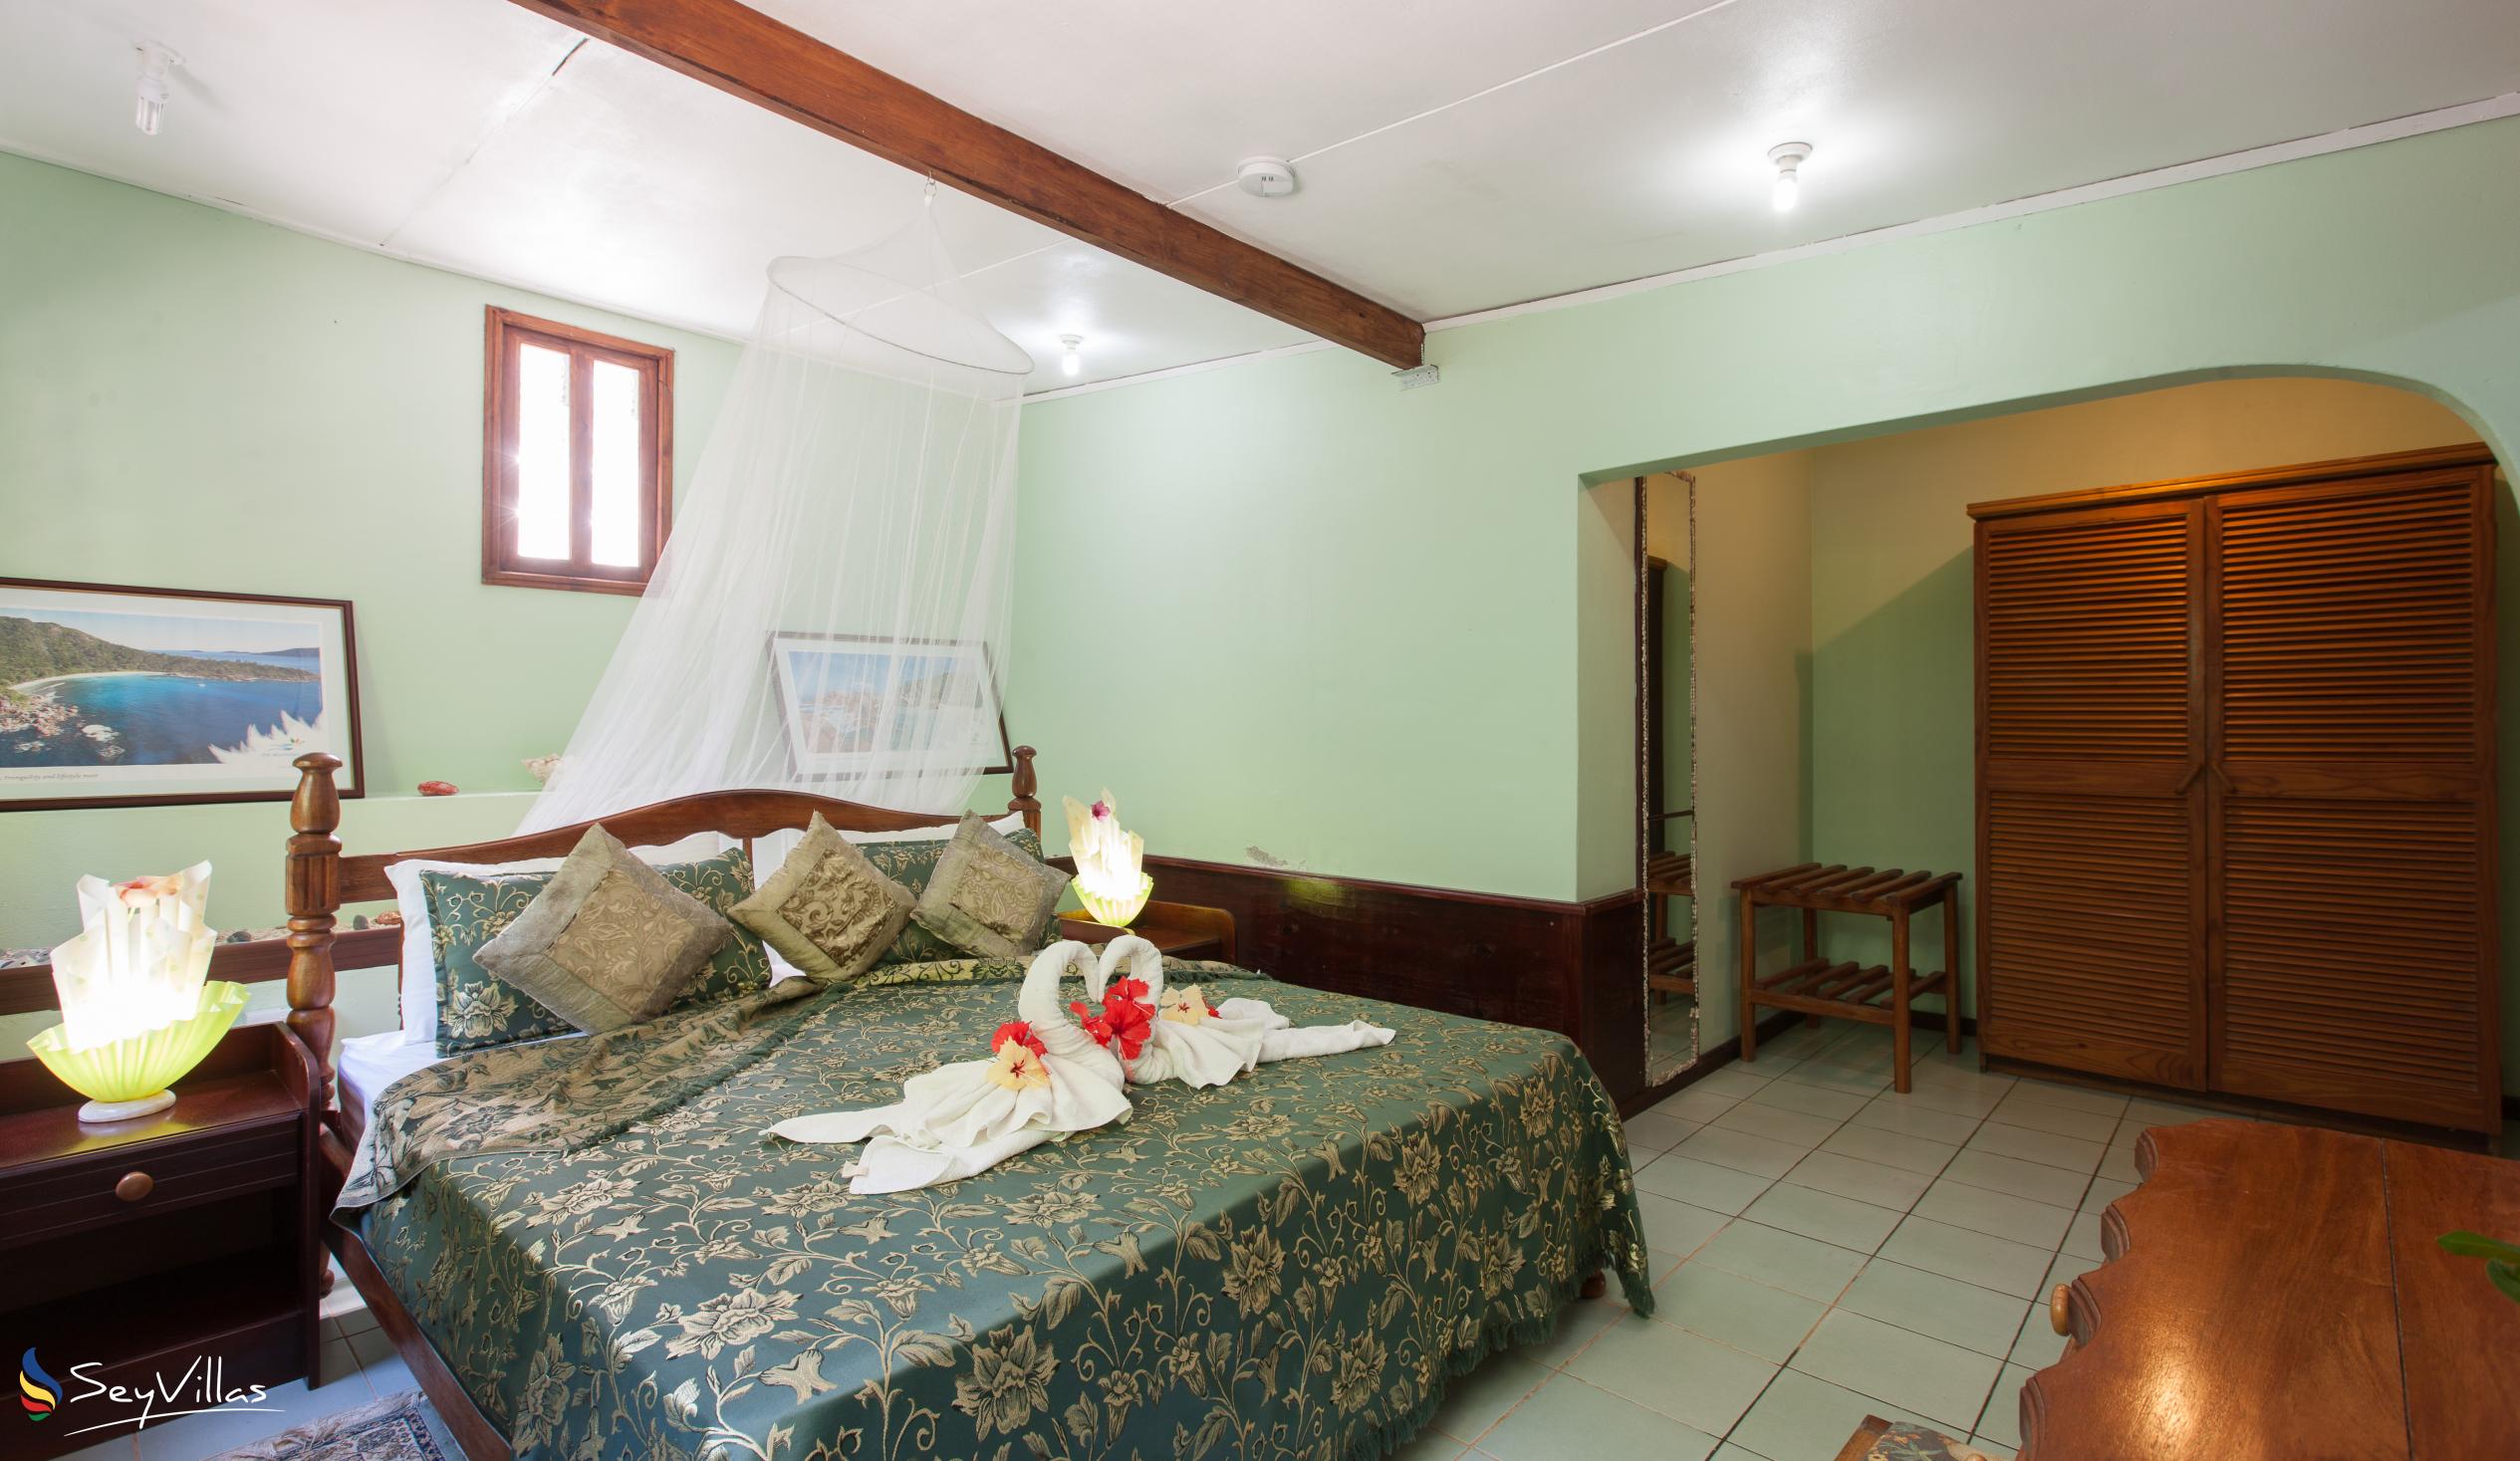 Foto 39: Belle des Iles Guest House - Appartamento con 1 camera - La Digue (Seychelles)